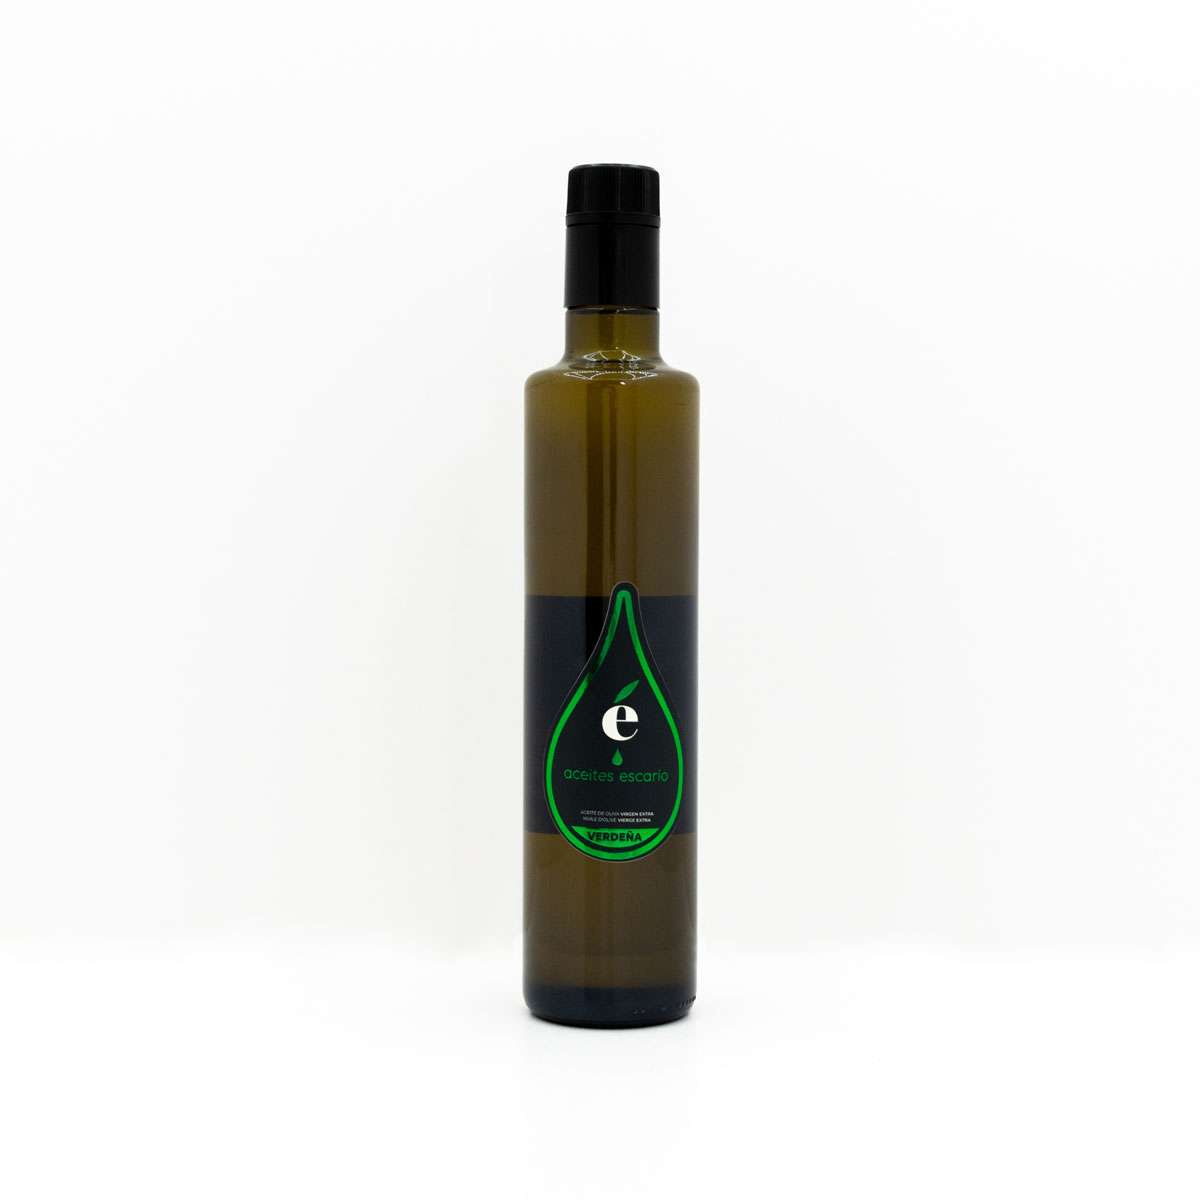 Botella de Aceites Escario monovarietal verdeña en tamaño de 500ml